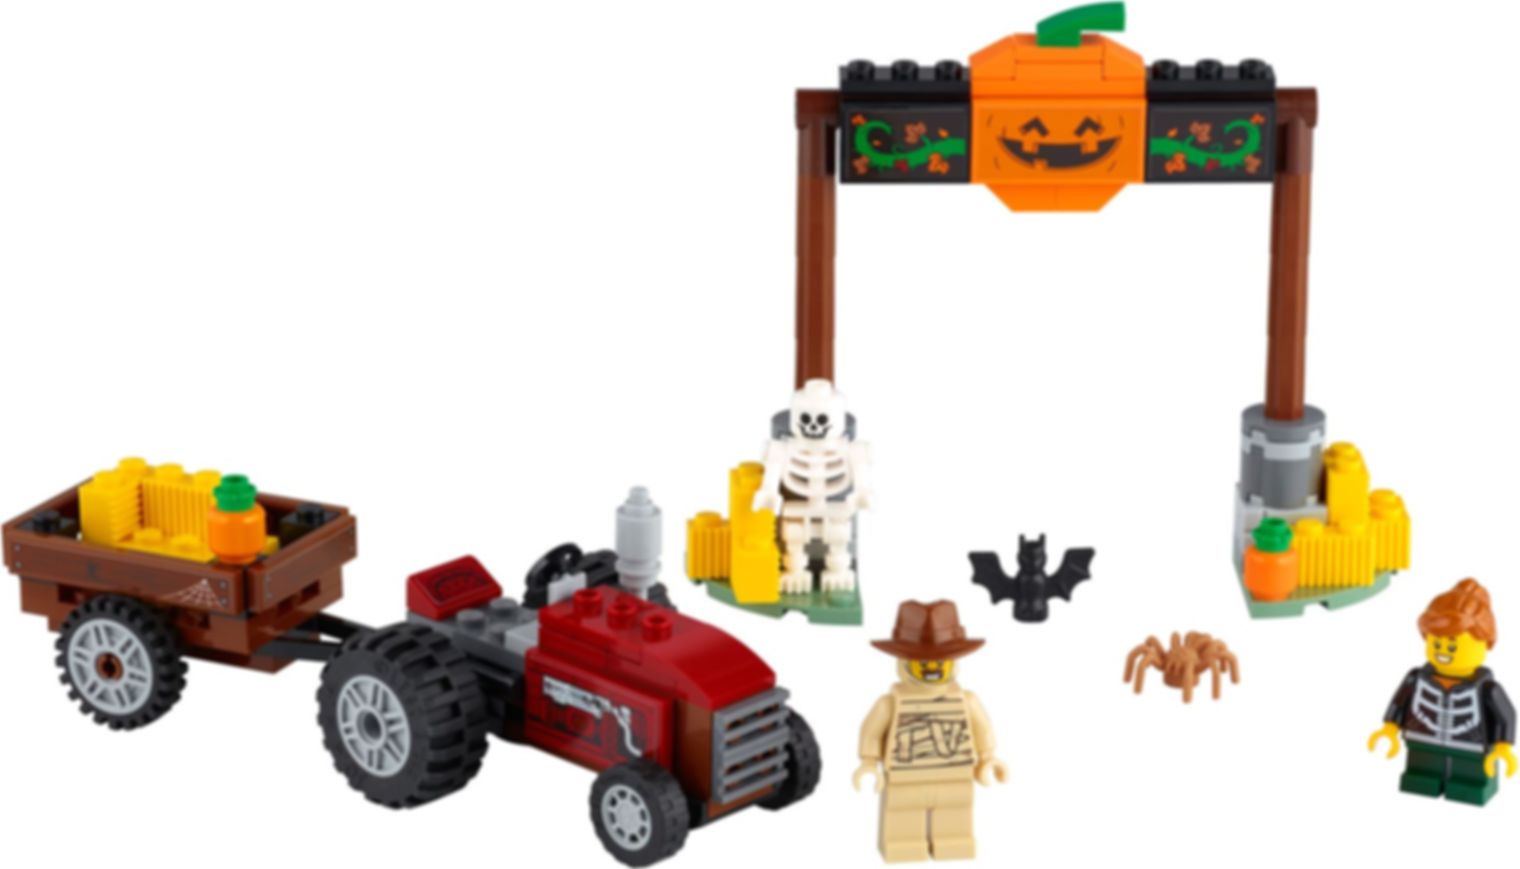 Halloween-Treckerfahrt komponenten